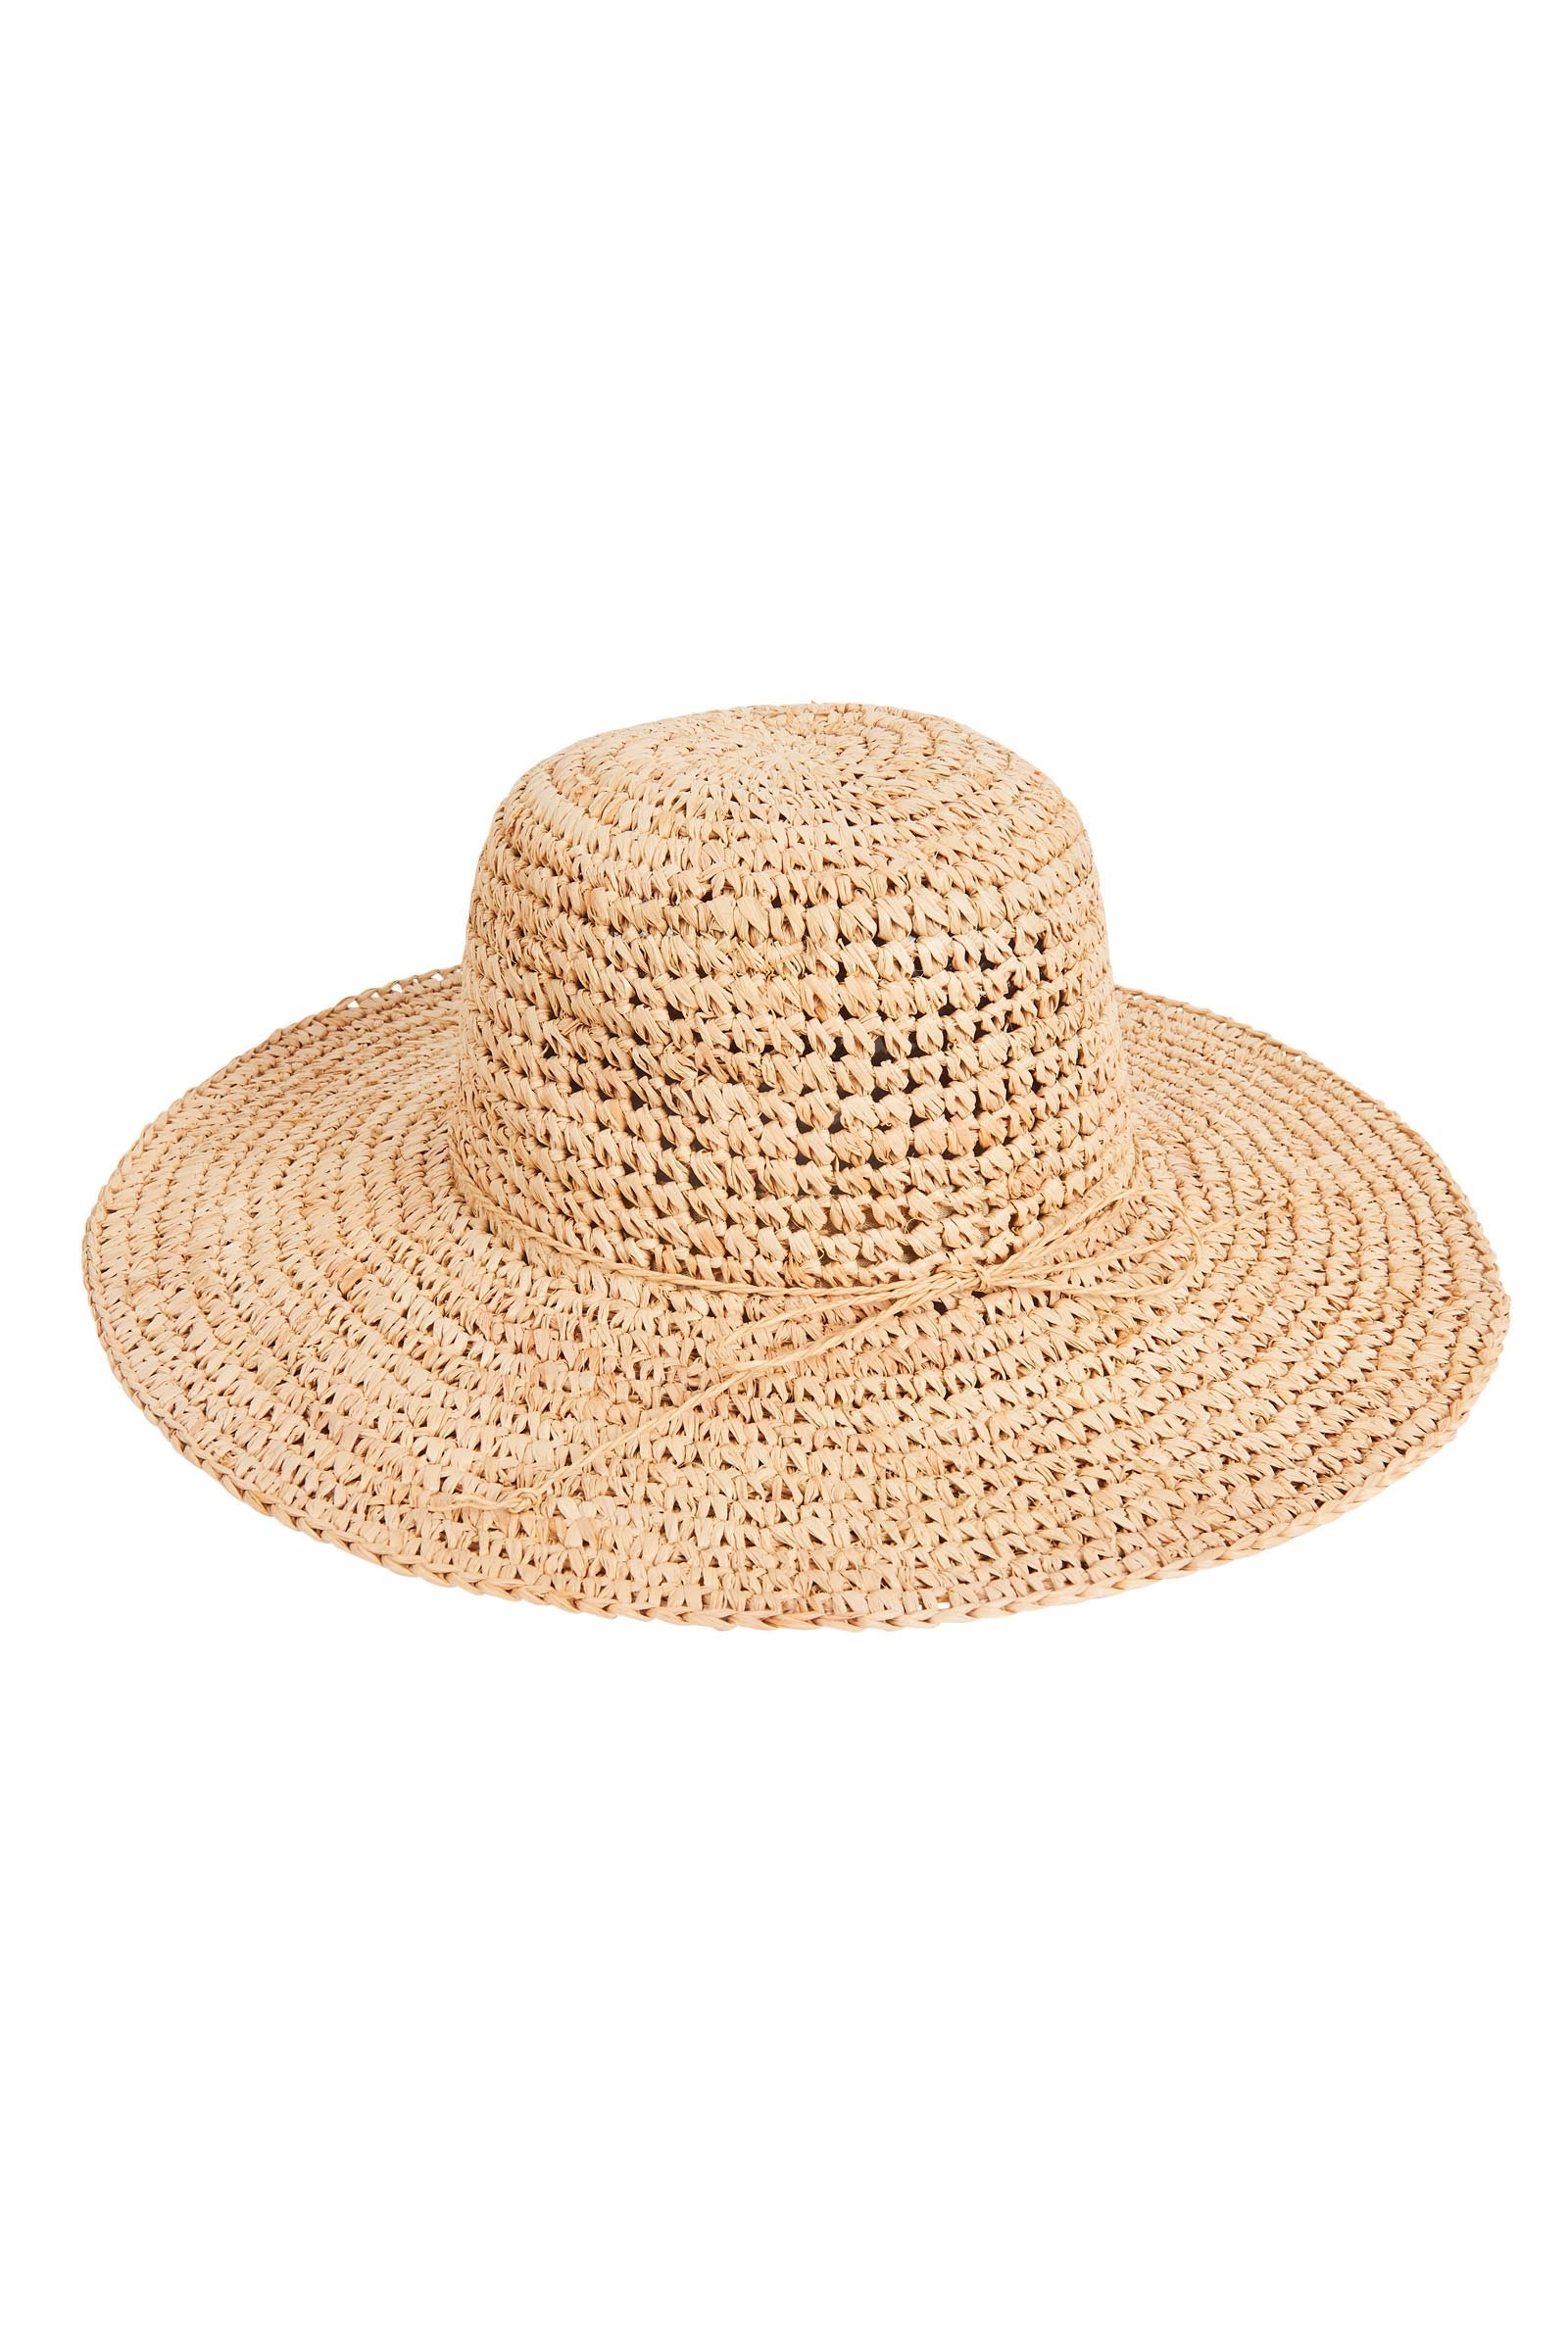 Marra Hat - Natural - eb&ive Hat